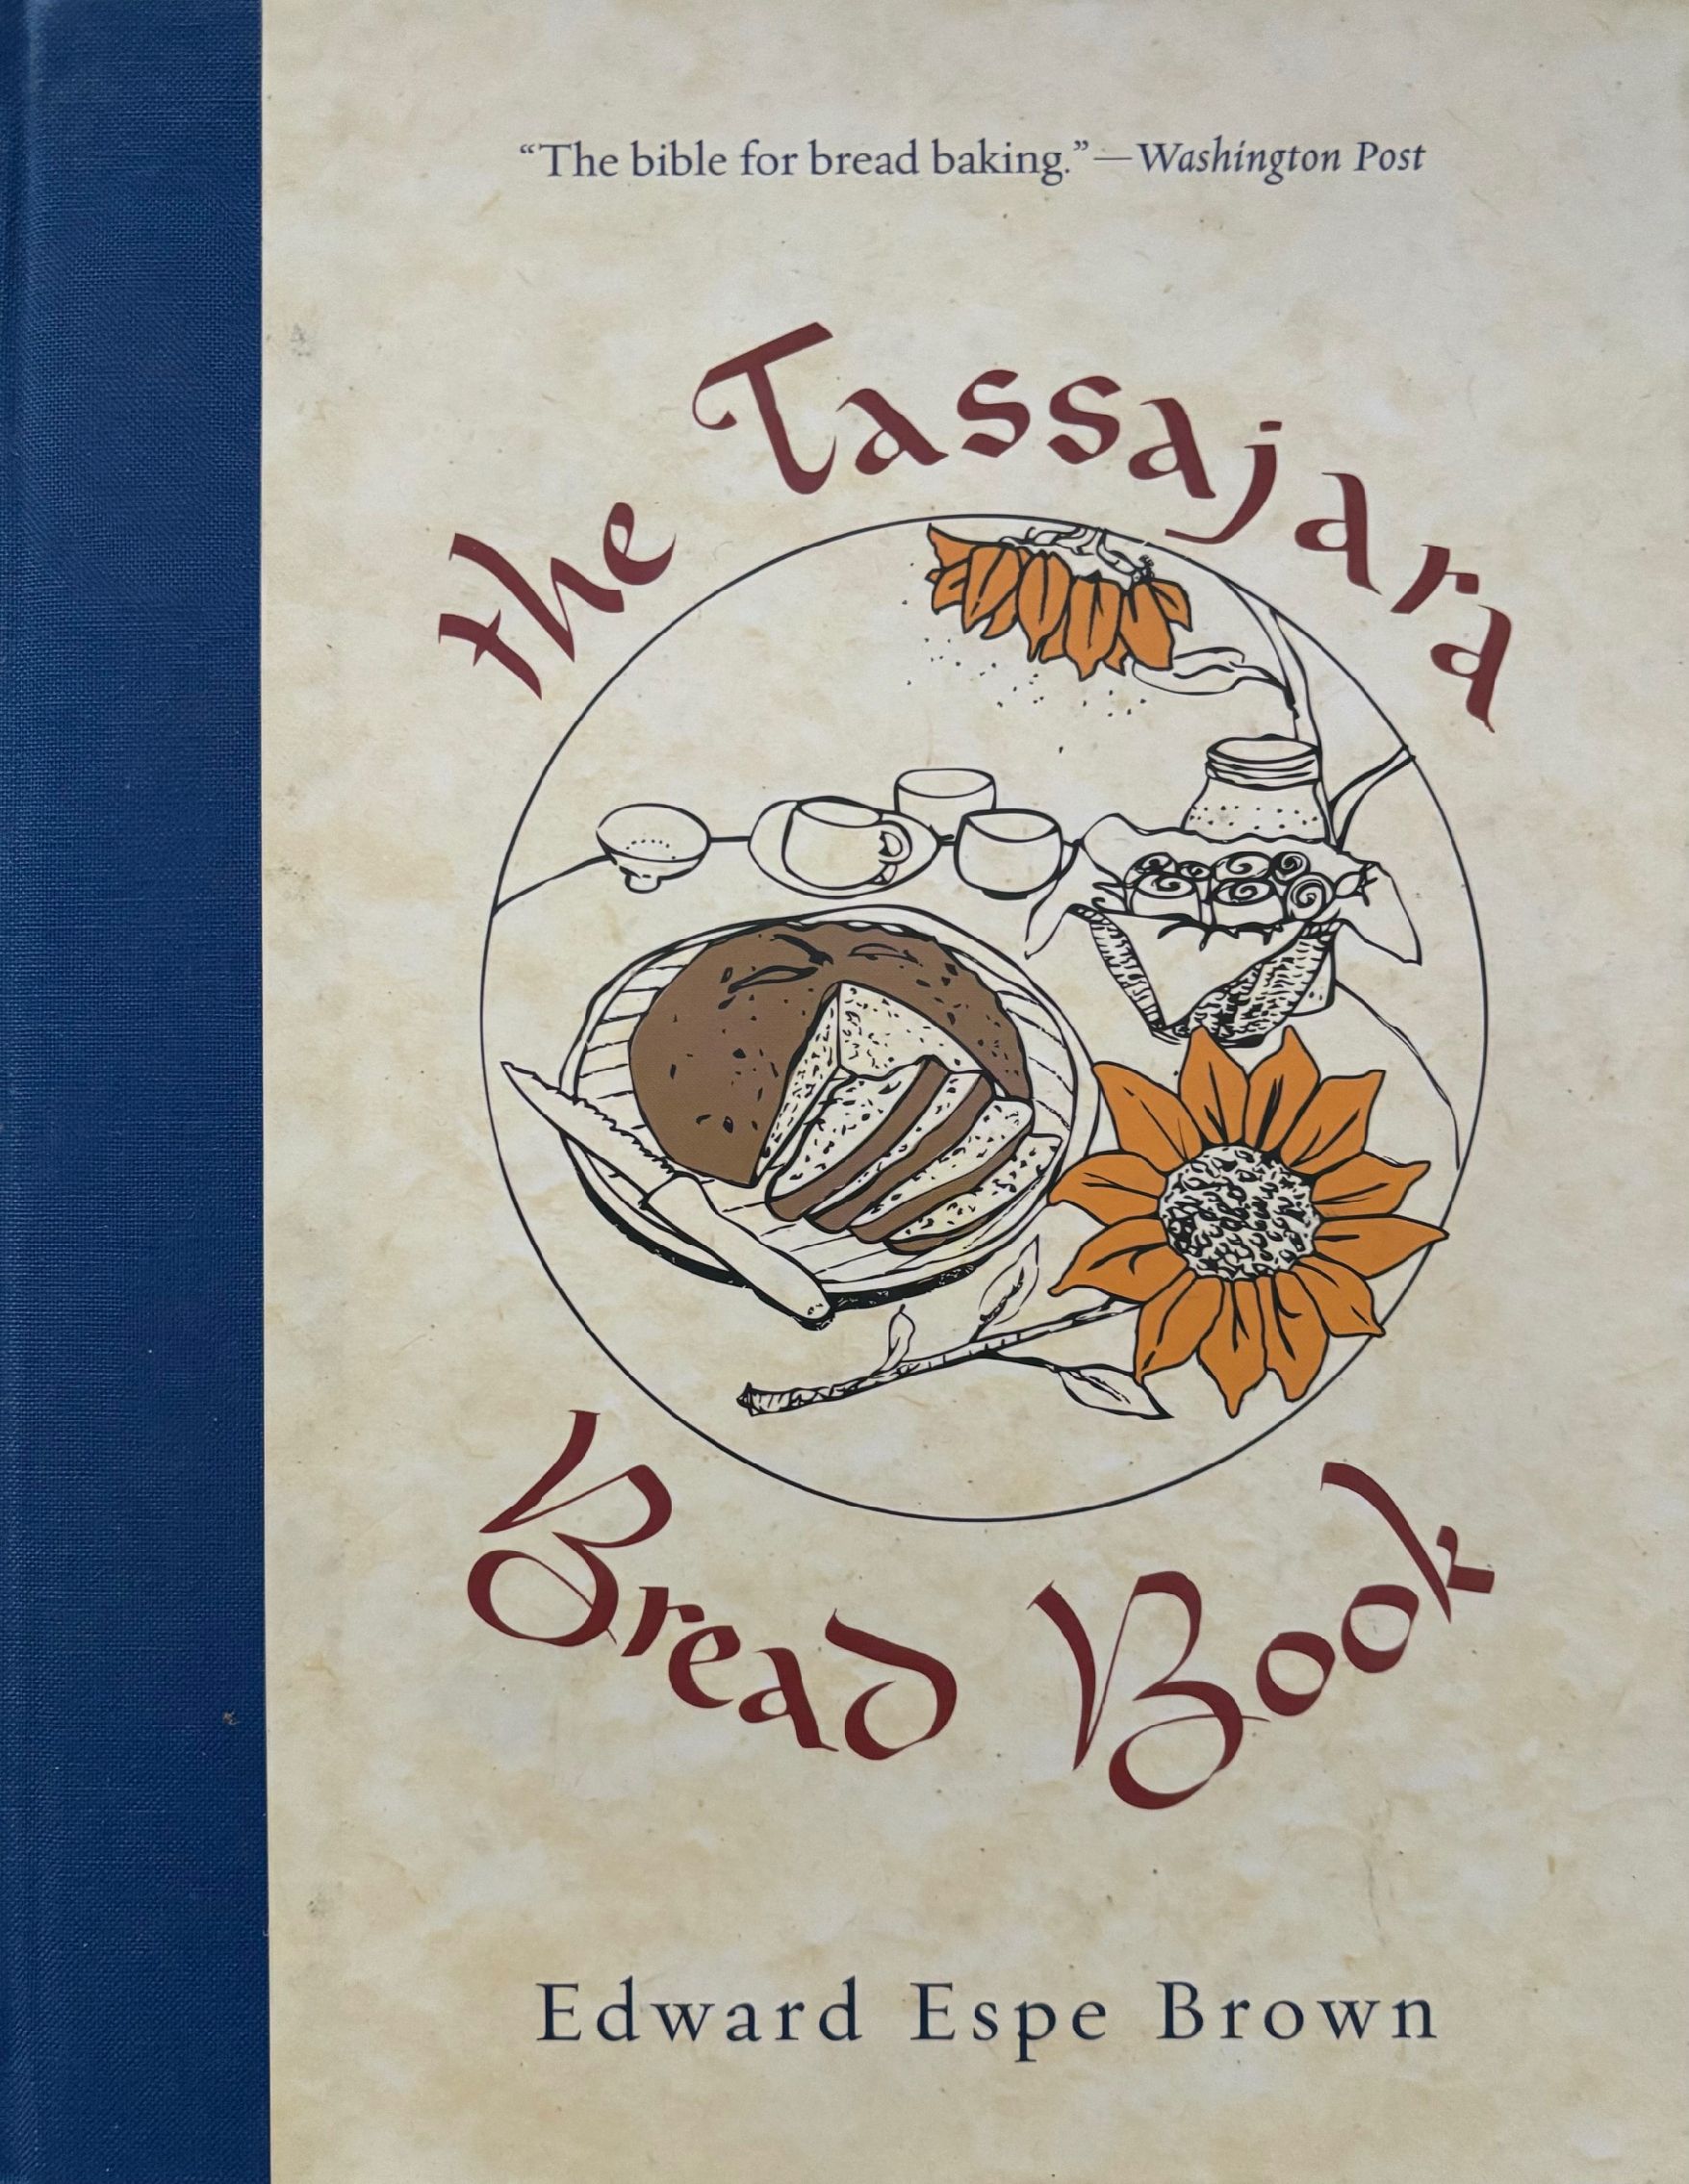 (*NEW ARRIVAL*) Edward Espe Brown. The Tassajara Bread Book. *Signed*